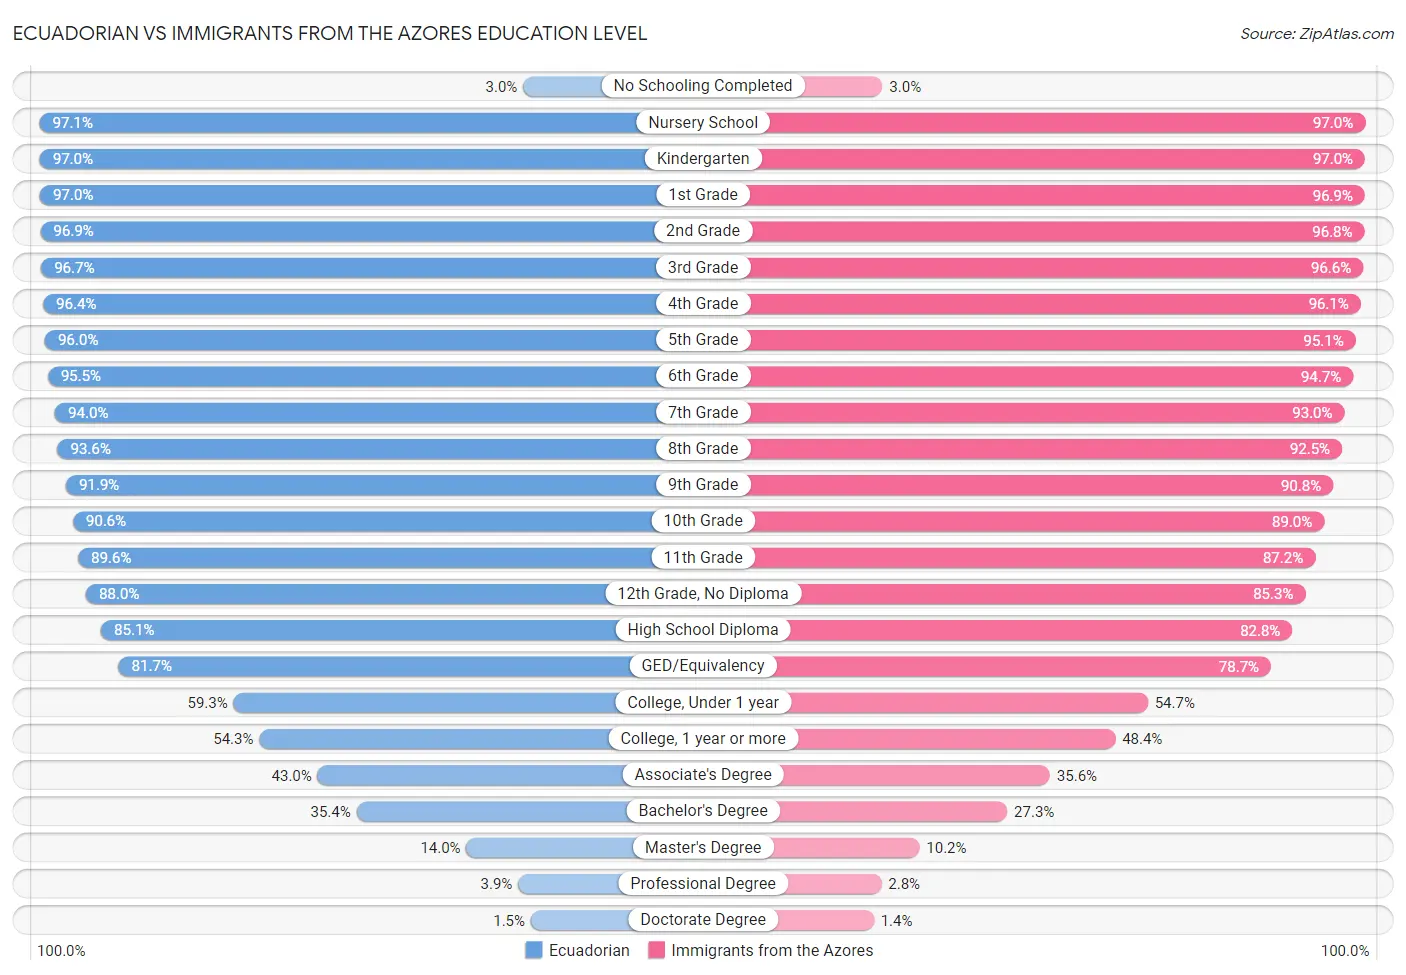 Ecuadorian vs Immigrants from the Azores Education Level